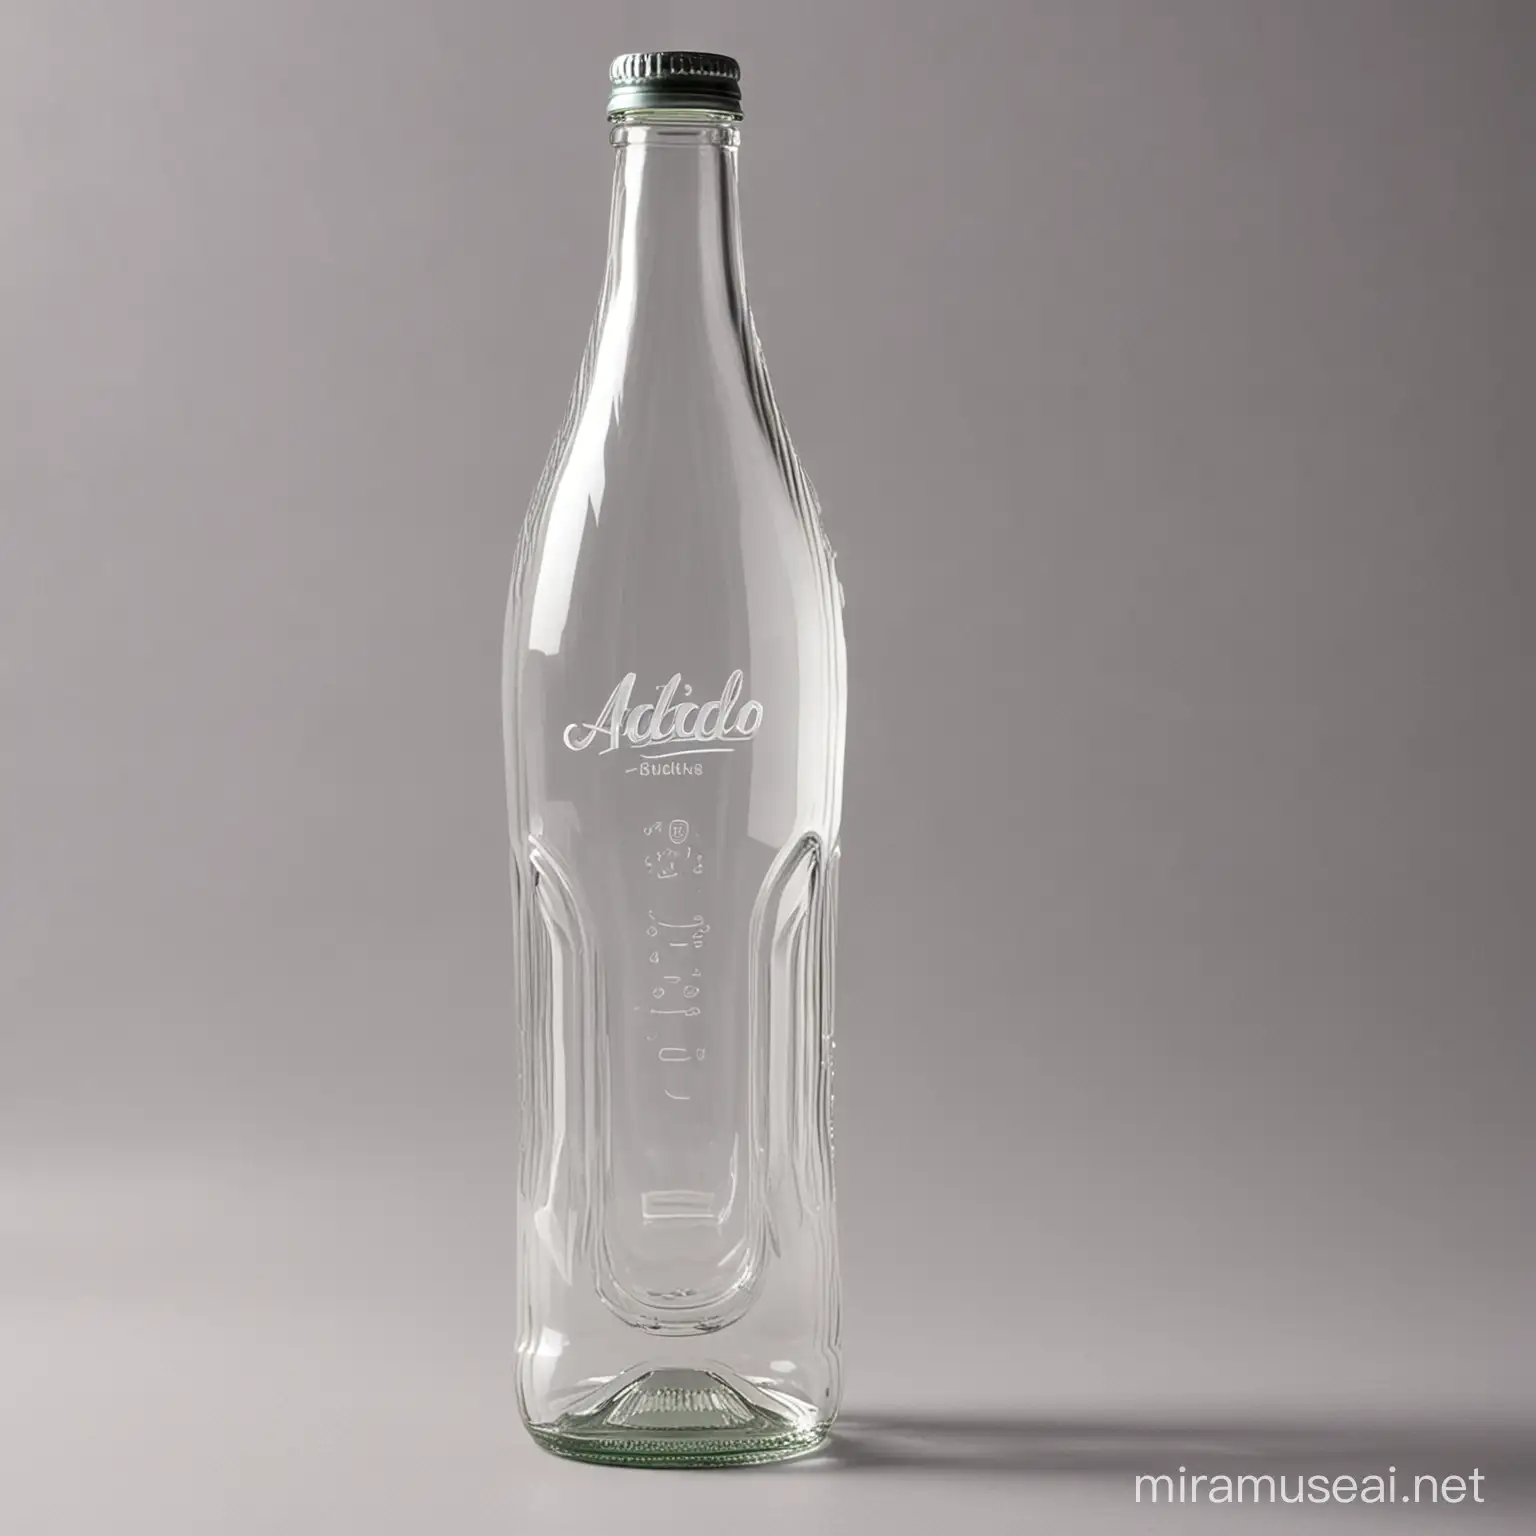 Bottle drink with name ABIDO BOTTLER